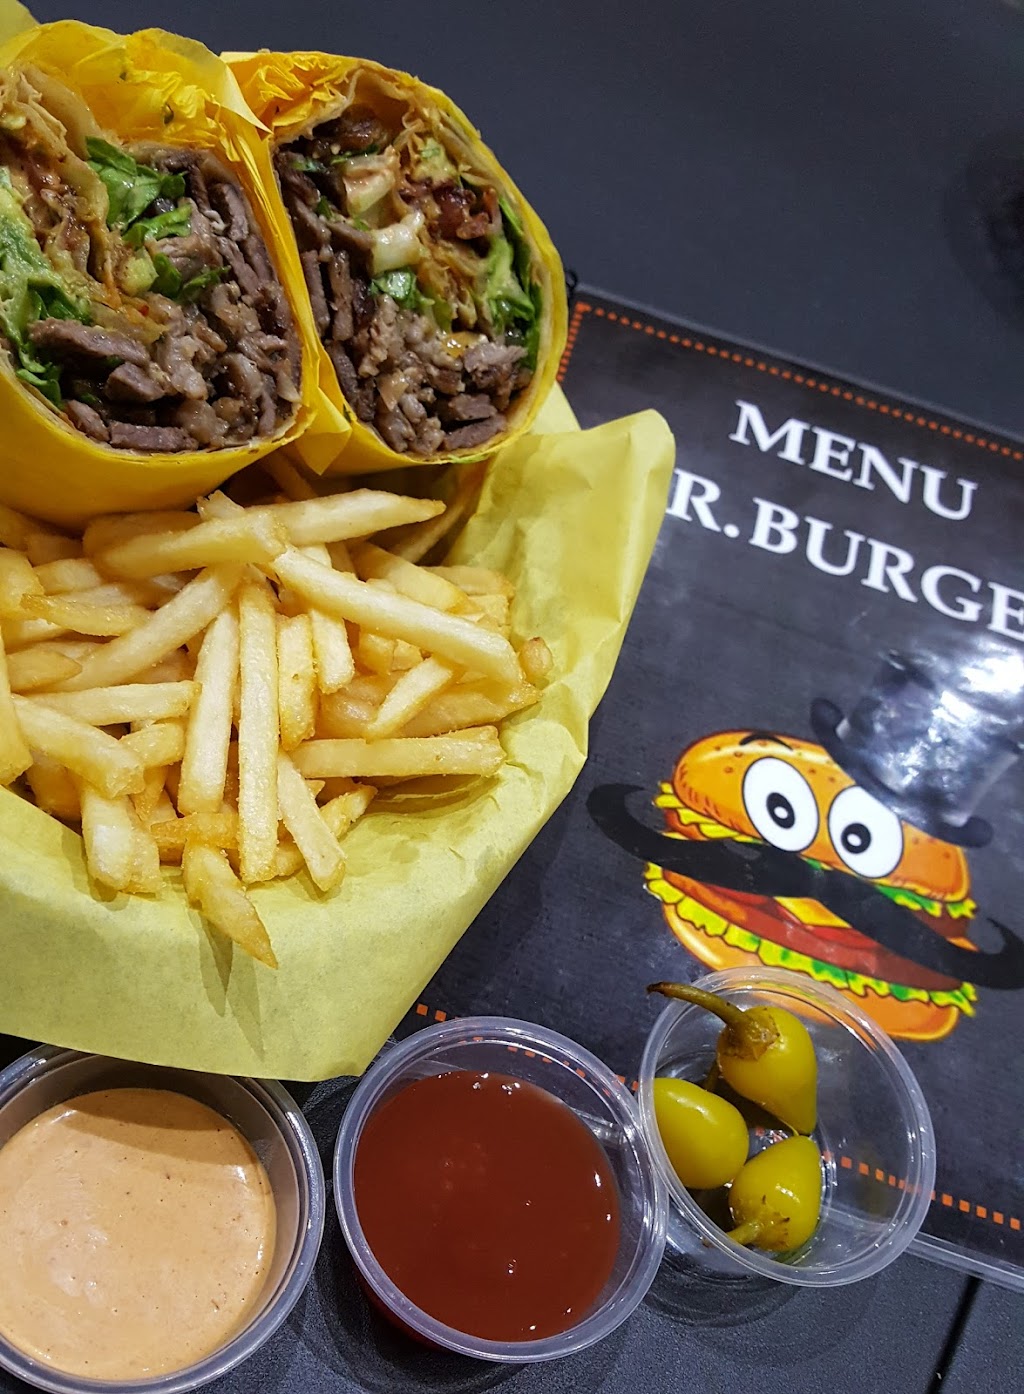 Mr. Burger | Boulevard Manuel J Clouthier L-C98, Plaza Monarca, Lago Sur, 22016 Tijuana, B.C., Mexico | Phone: 664 977 4358